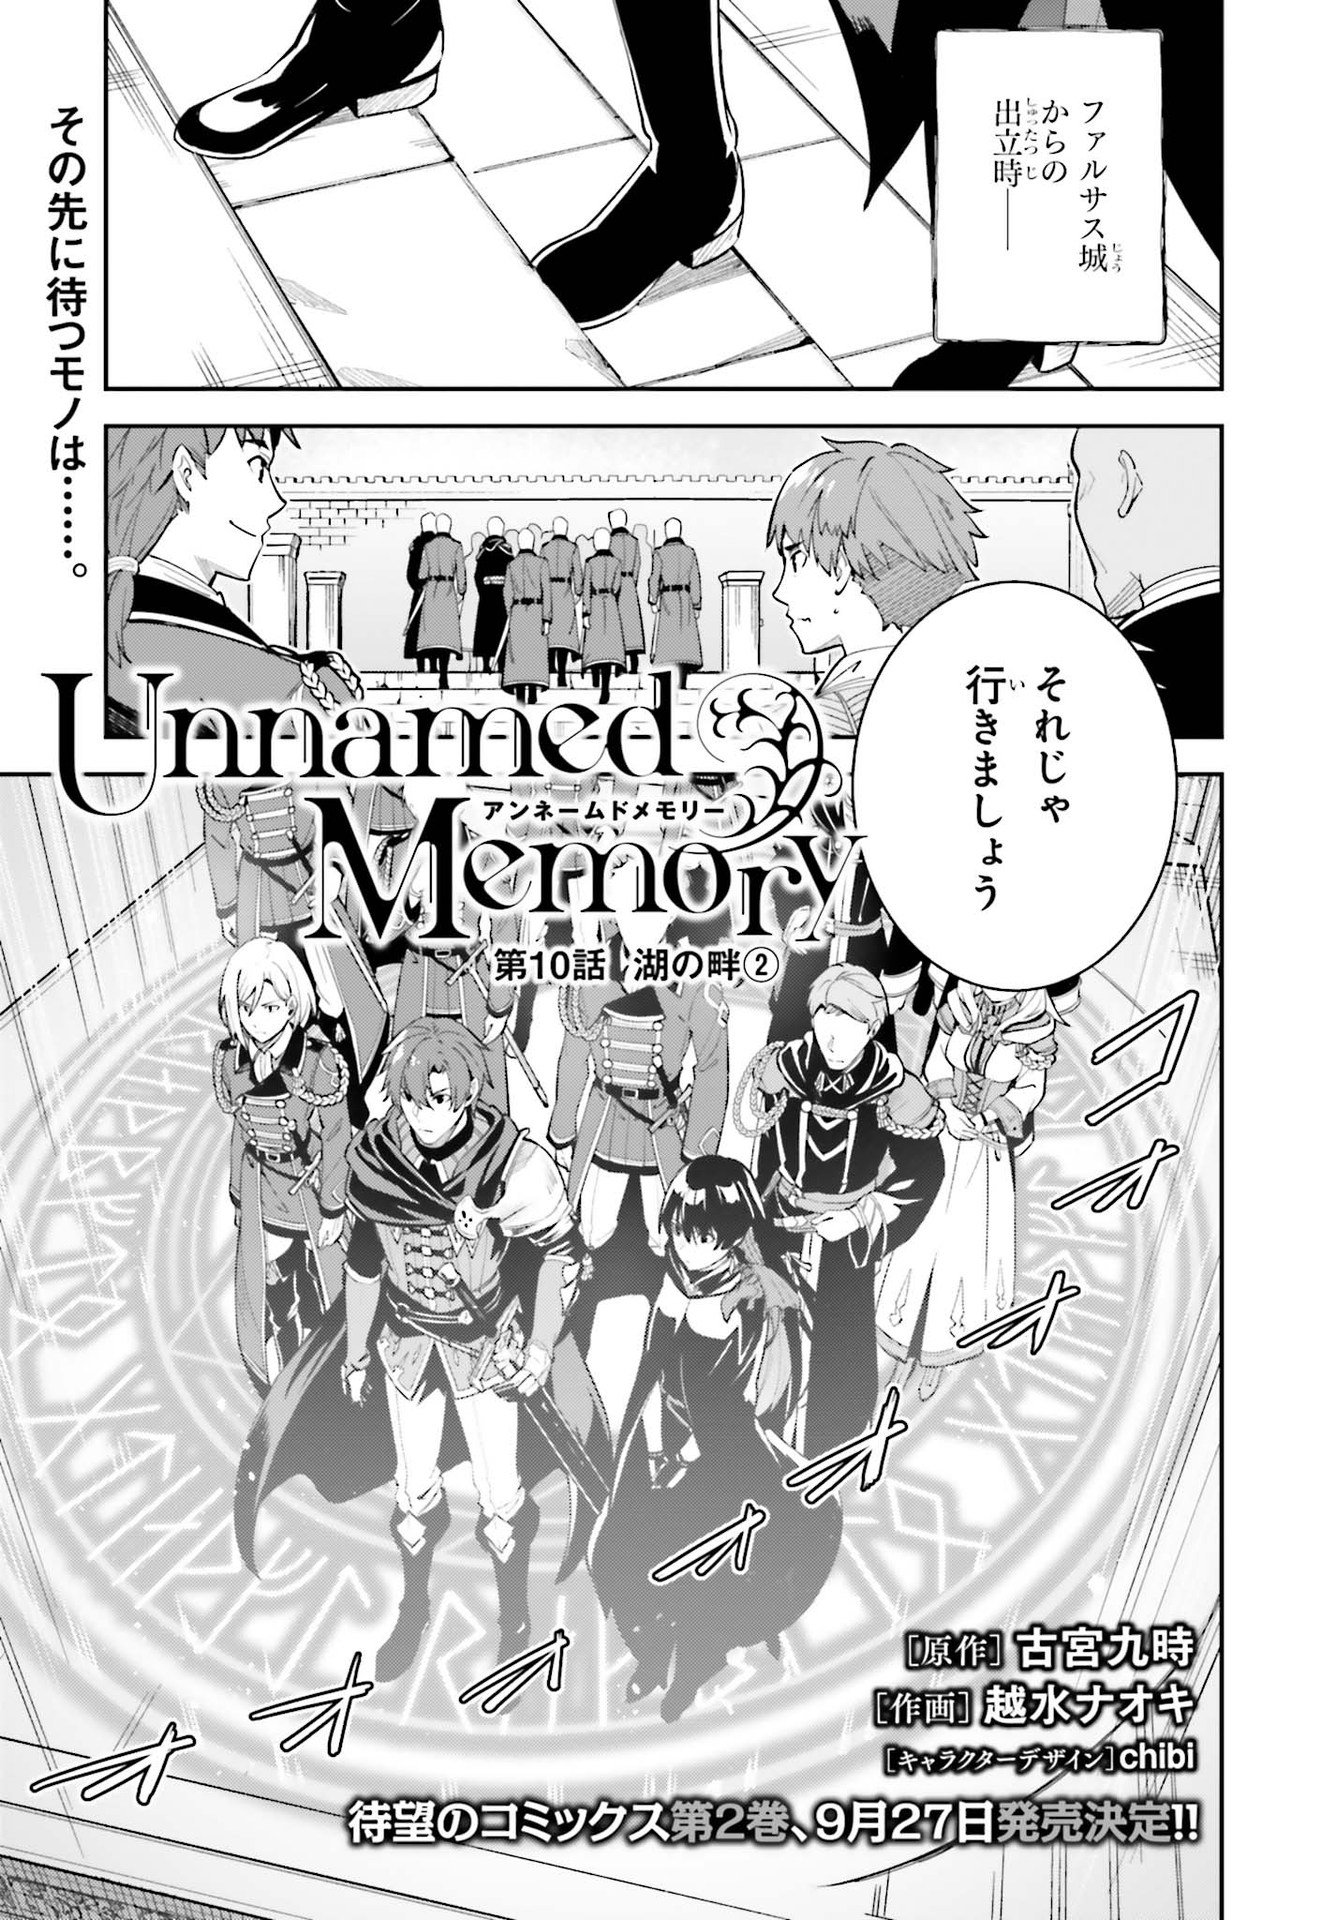 Unnamed Memory (manga) 第10話 - Page 1